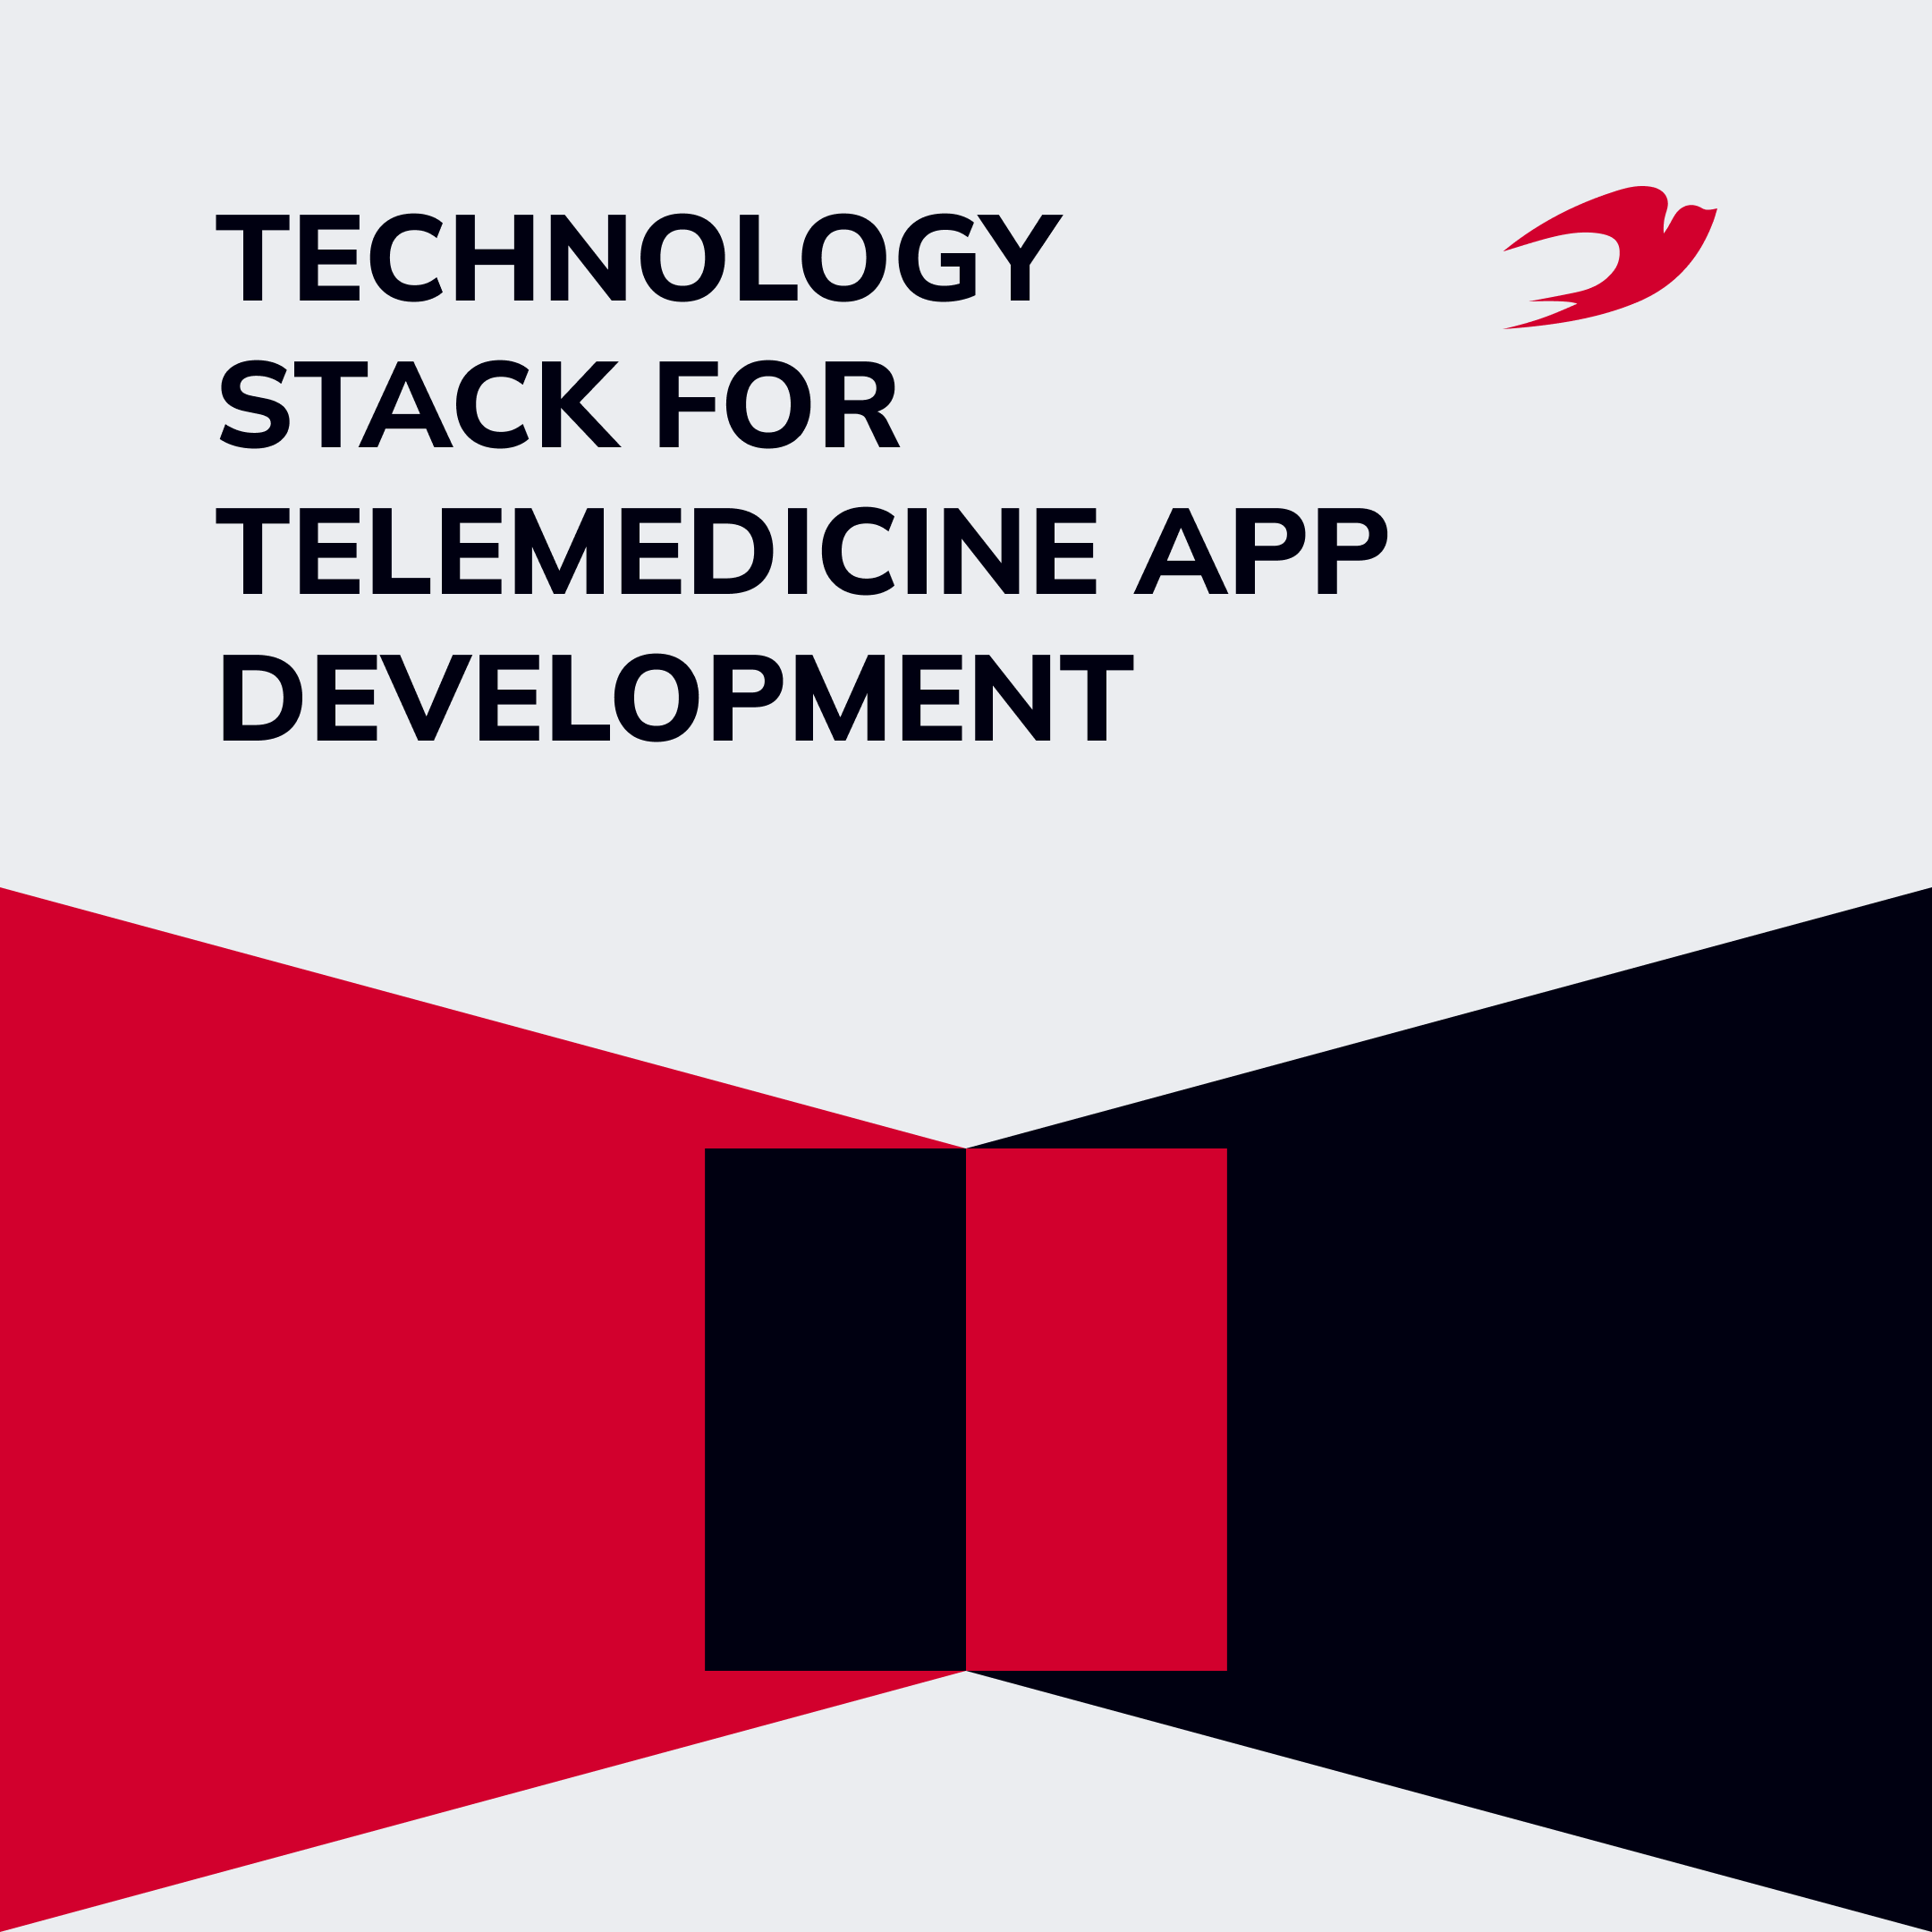 Technology Stack for Telemedicine App Development